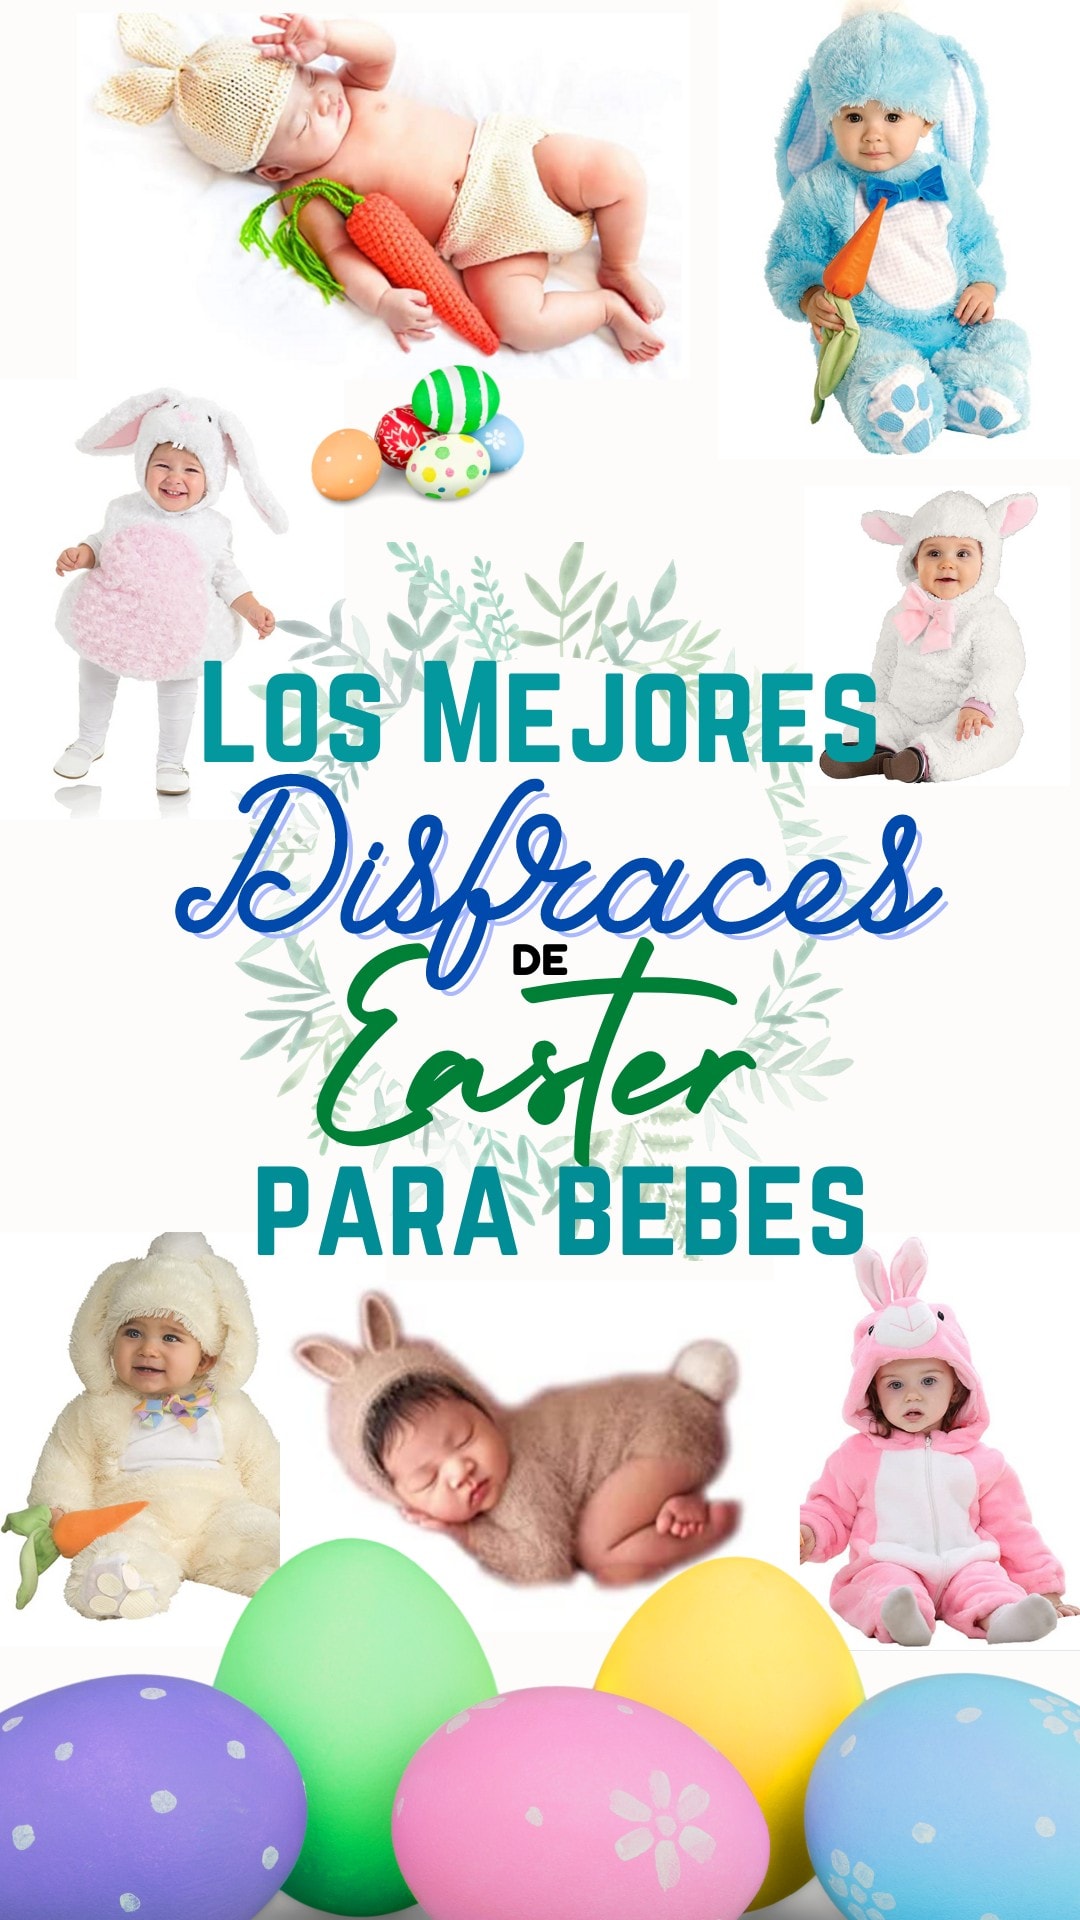 Los Mejores disfraces de Easter para bebés